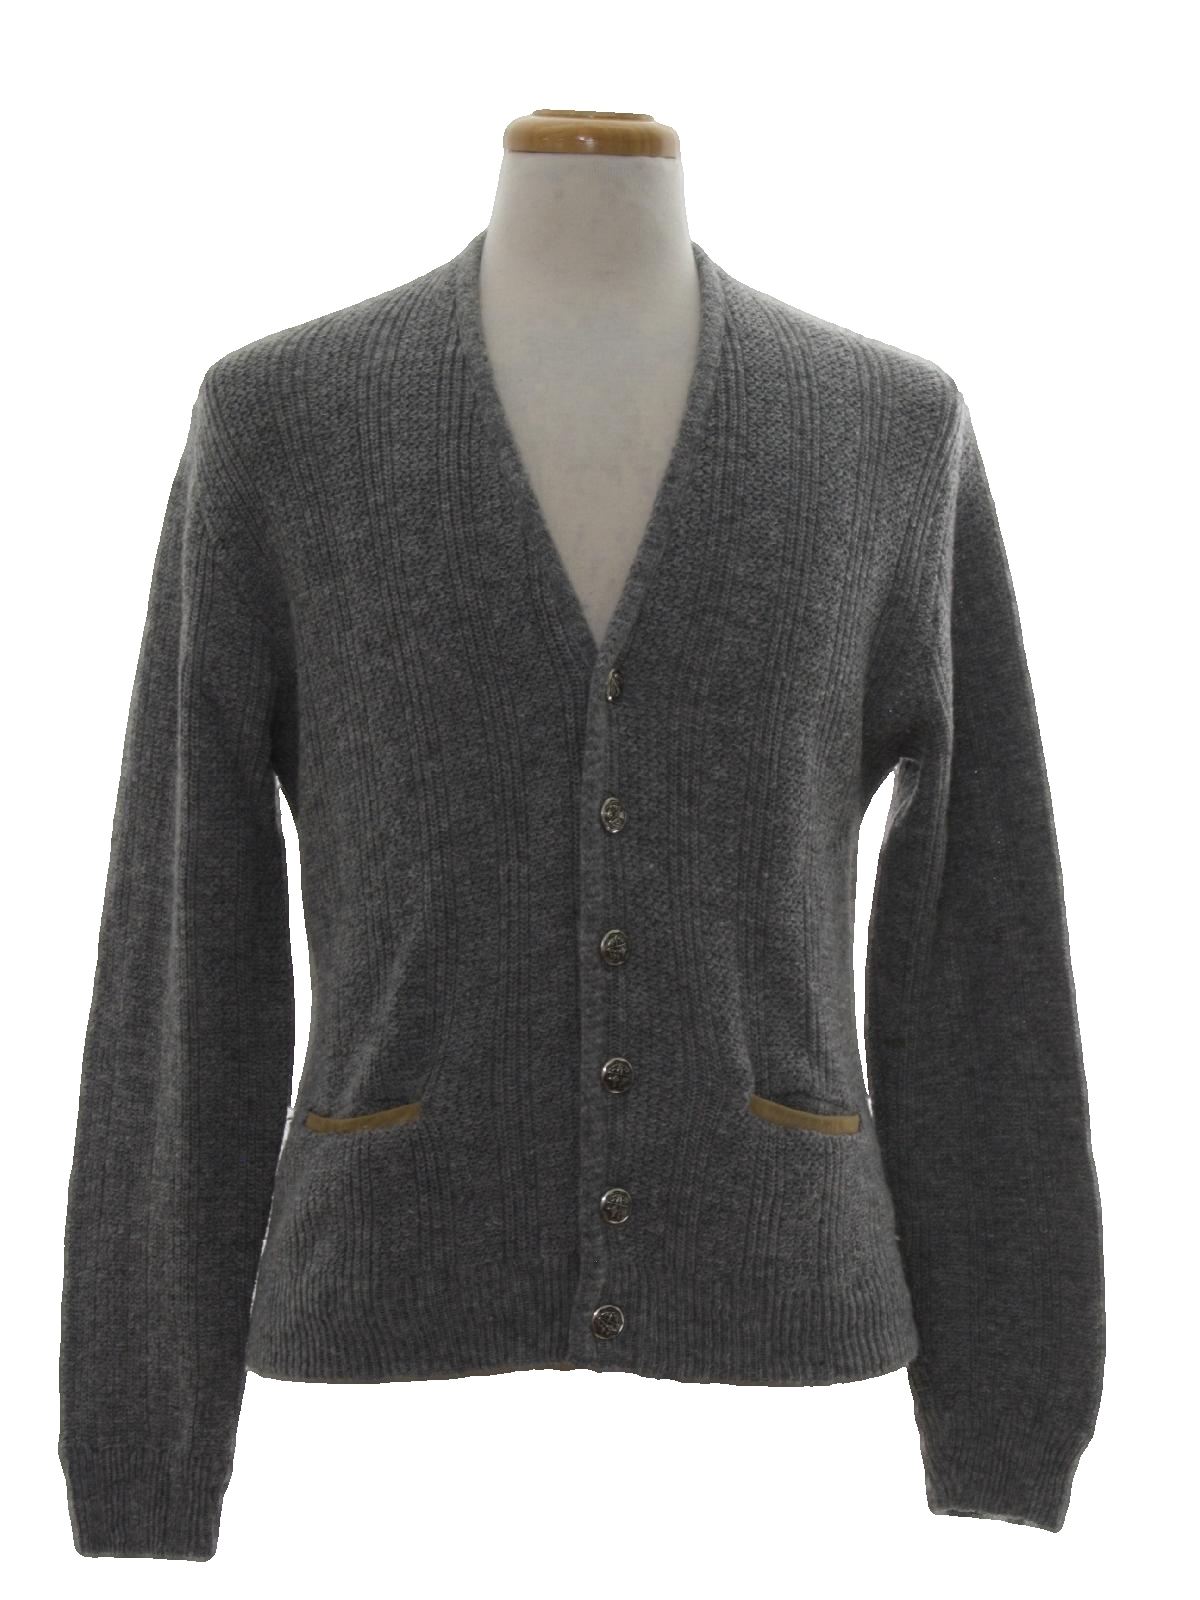 Retro Seventies Caridgan Sweater: 70s -Puritan- Mens heathered grey ...